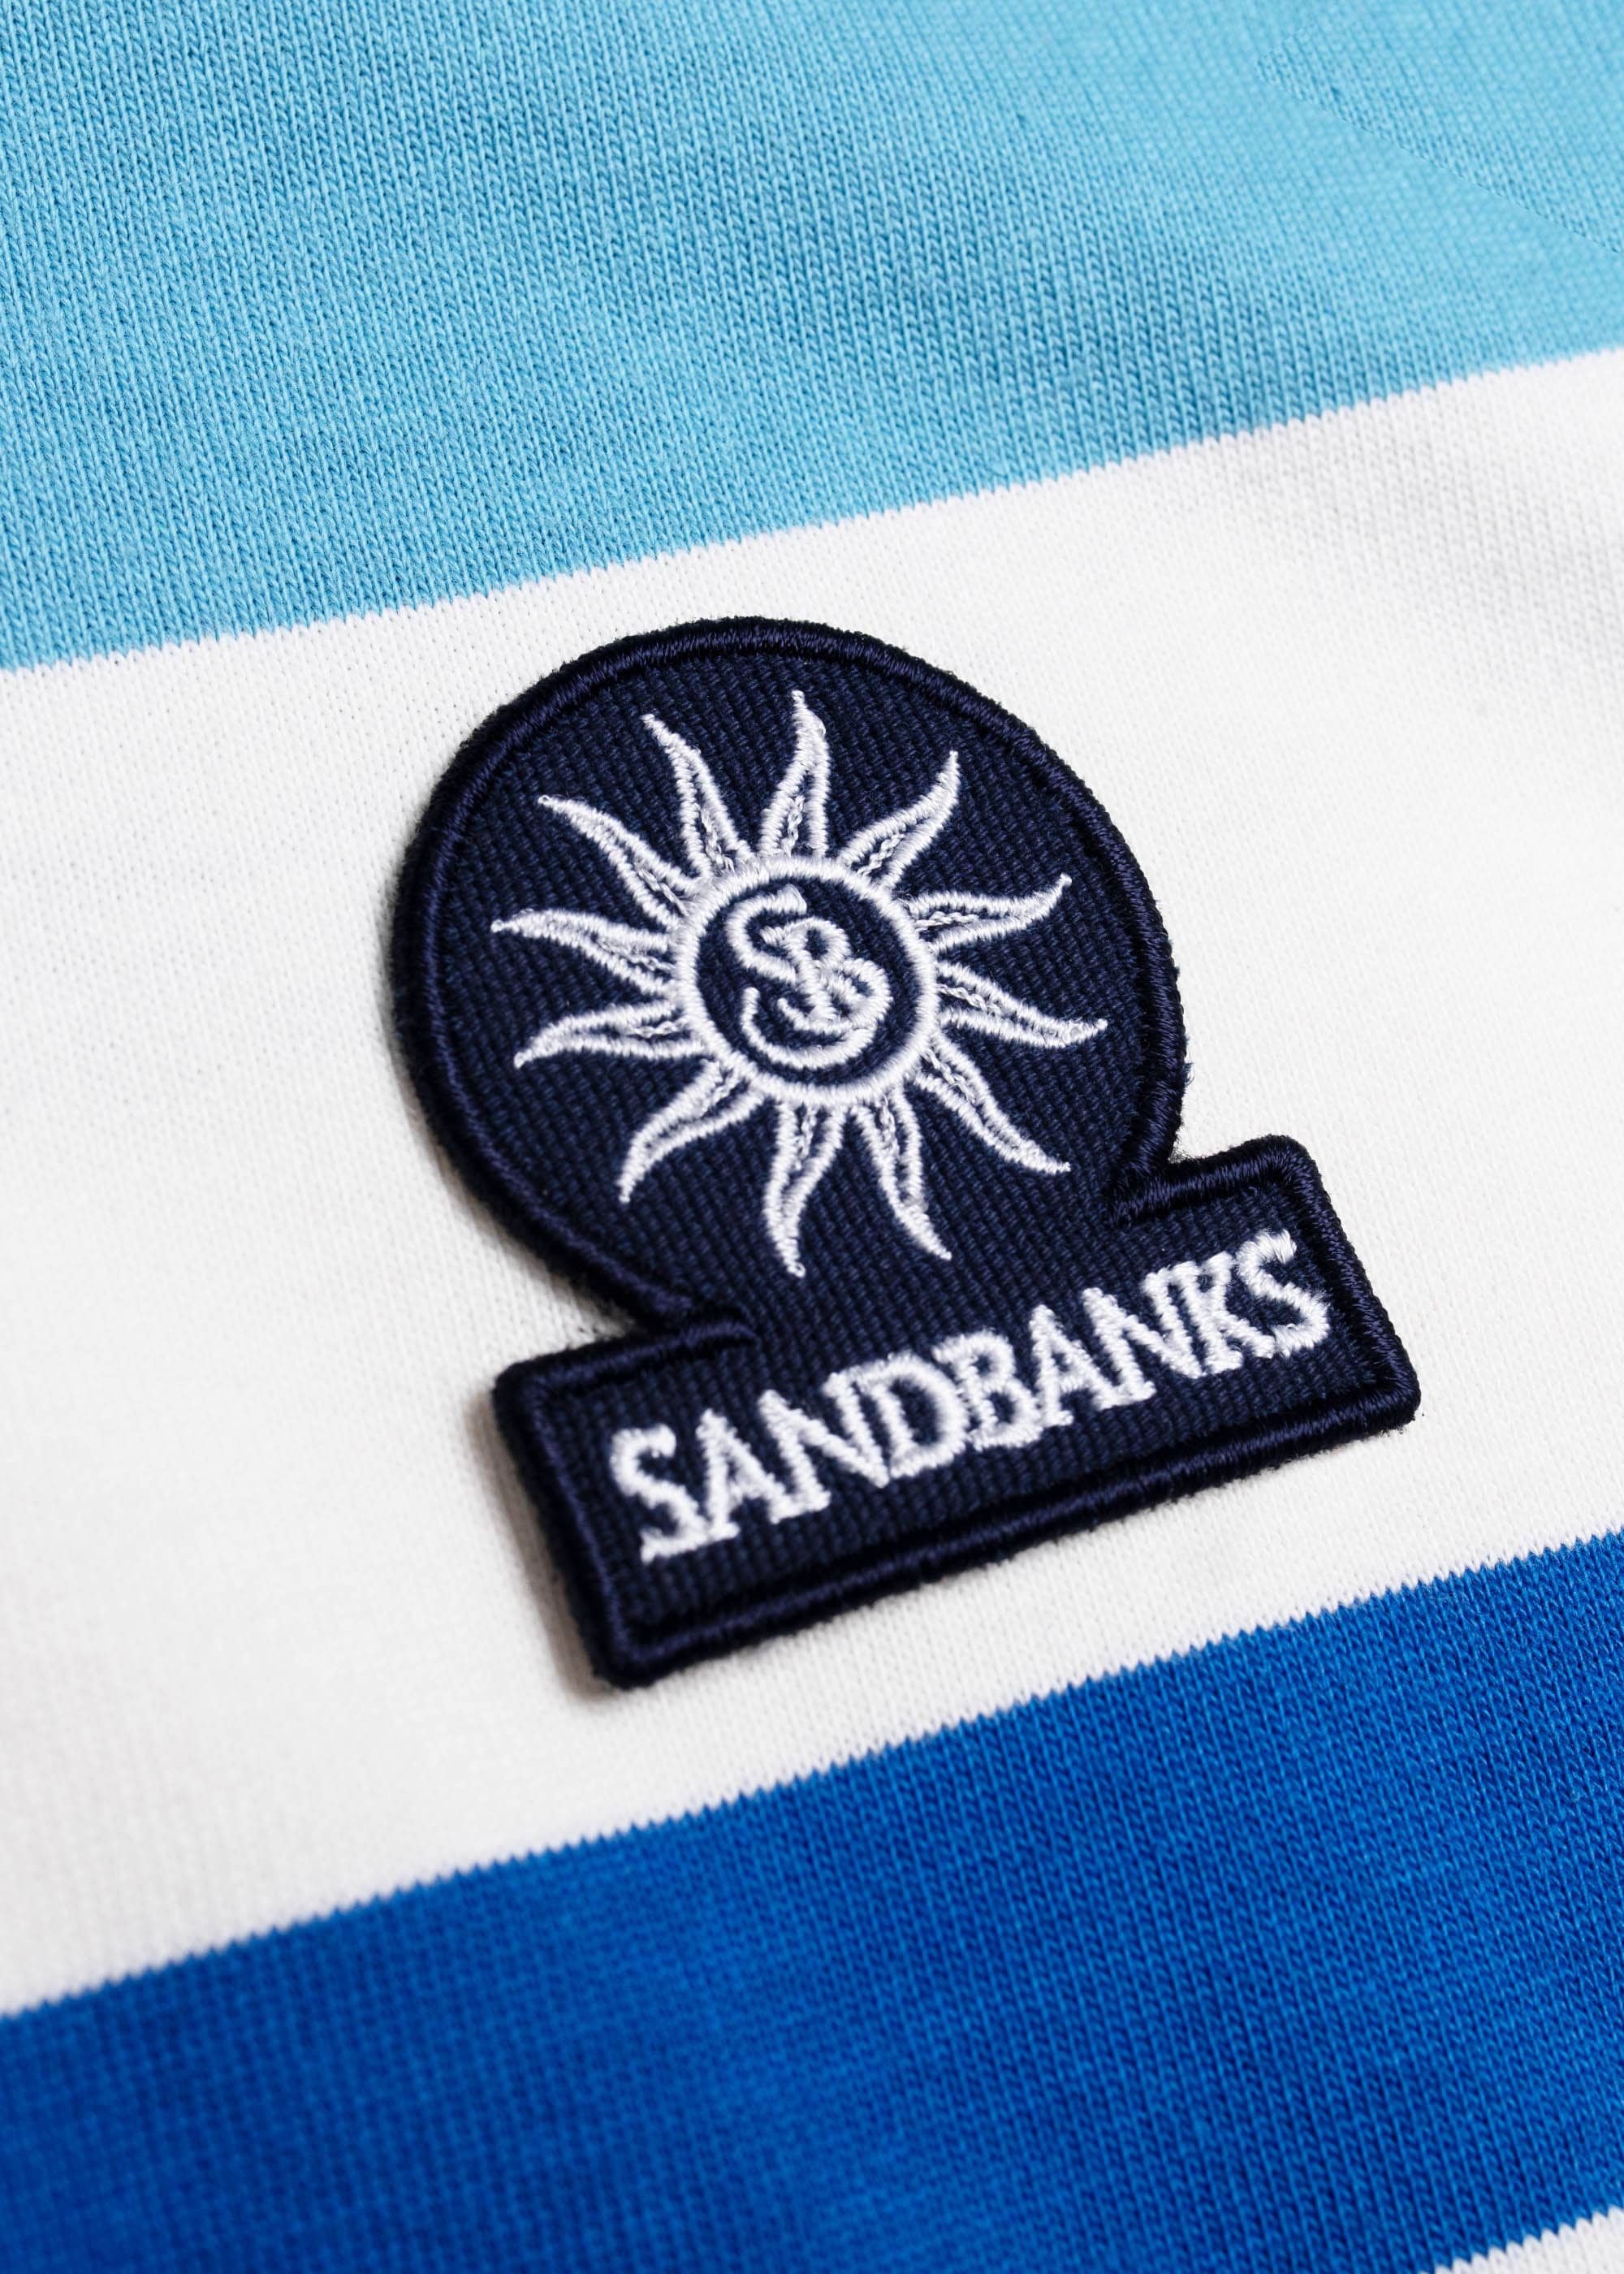 Sandbanks Stripe Rugby Shirt - Multi - sandbanksco.com